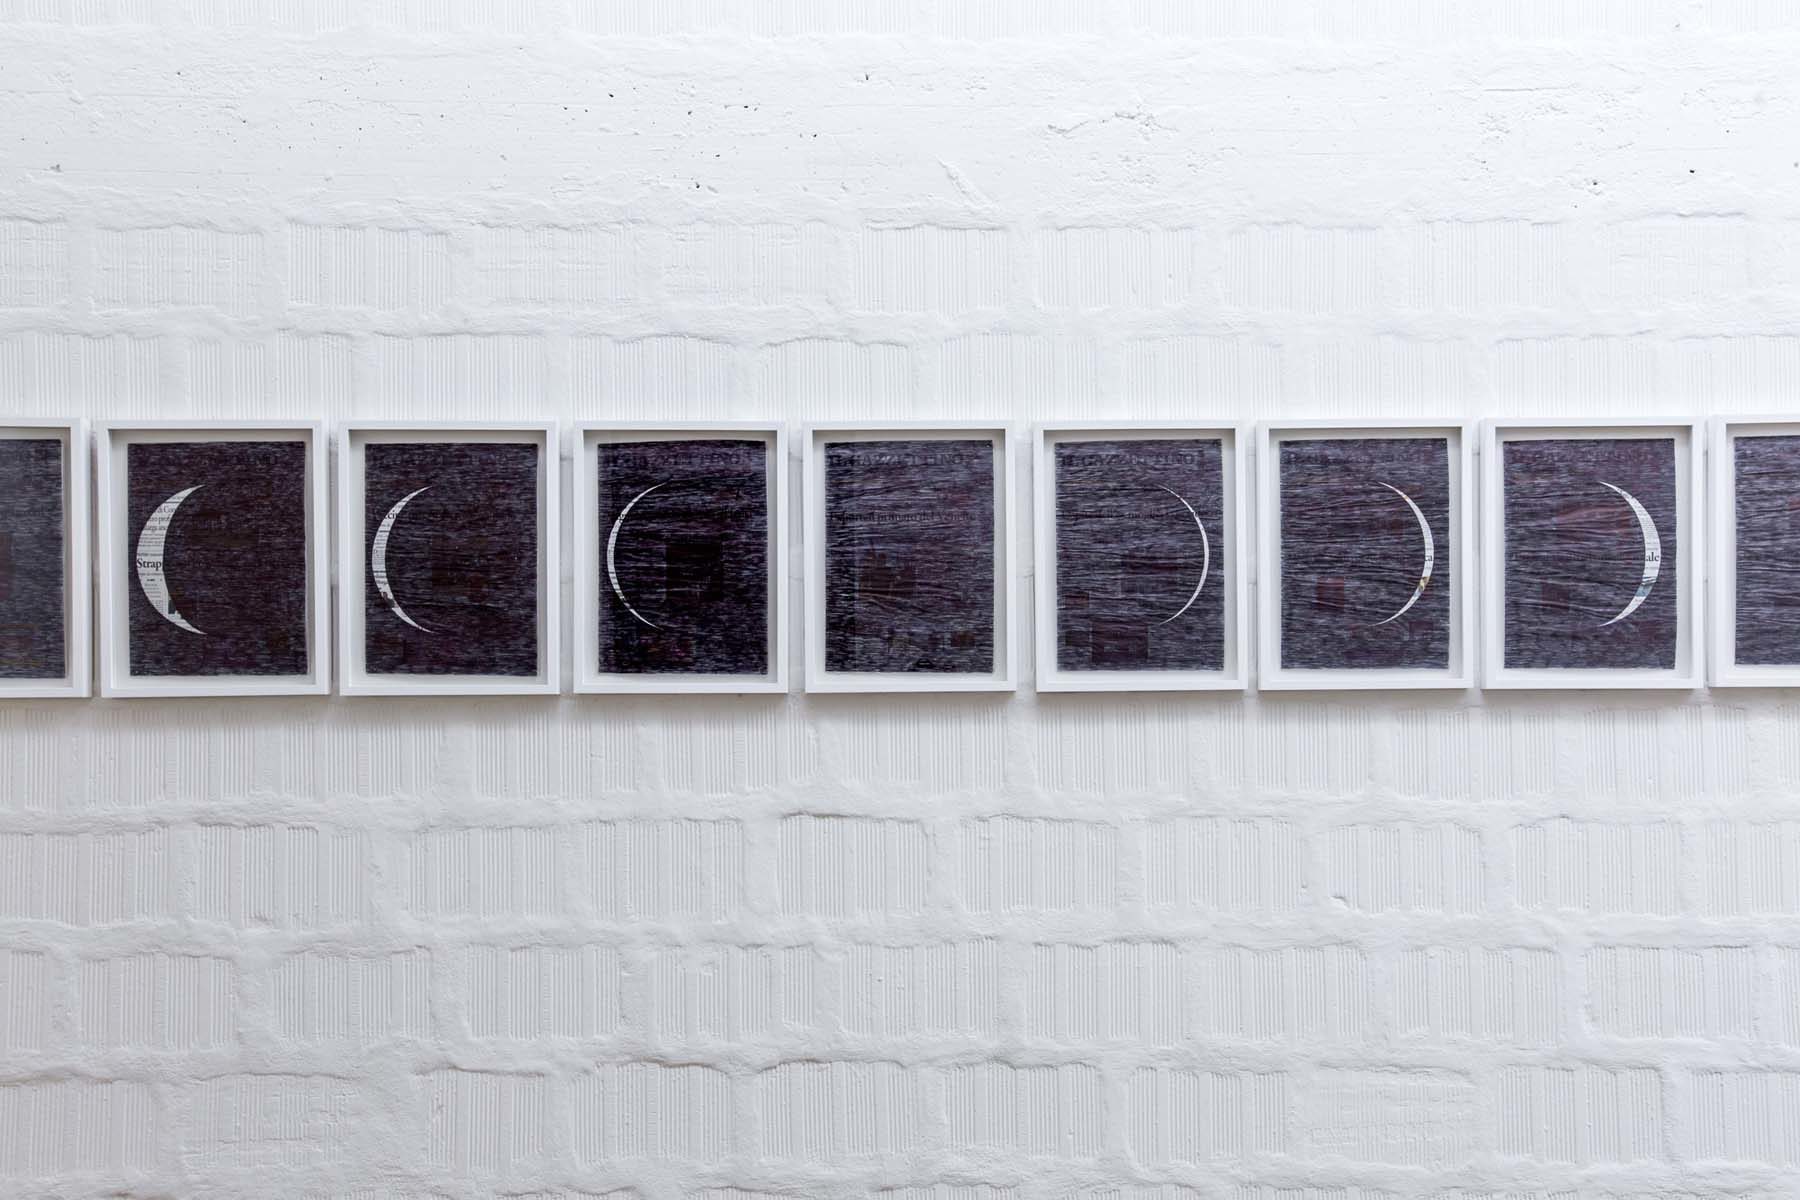 Marco Godinho, Lunar Cycle (9 July – 6 August 2017), 2017, black ballpoint on Il Gazzettino newspaper, 29 elements, 38 x 28 cm each